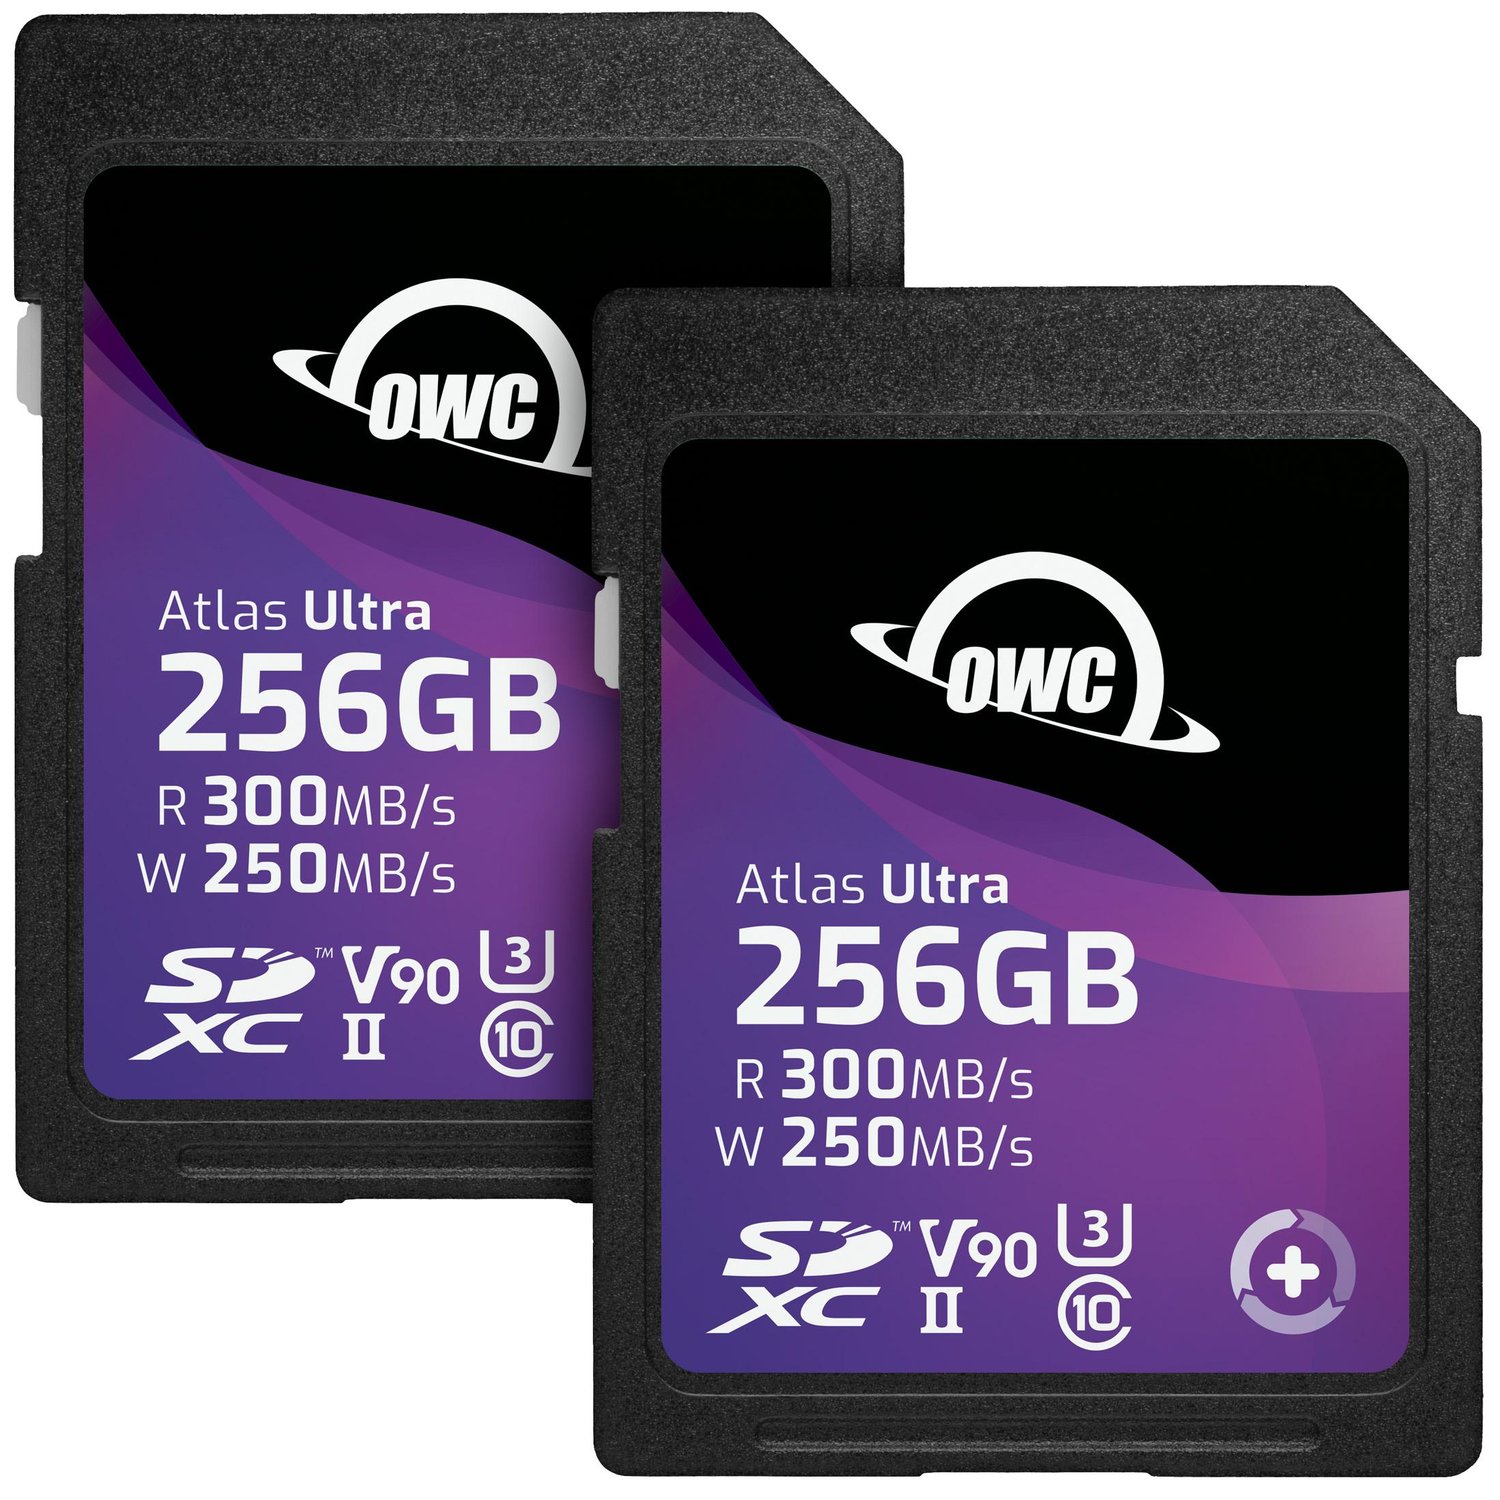 OWC 256GB Atlas Ultra SDXC V90 UHS-II Memory Card at MacSales.com